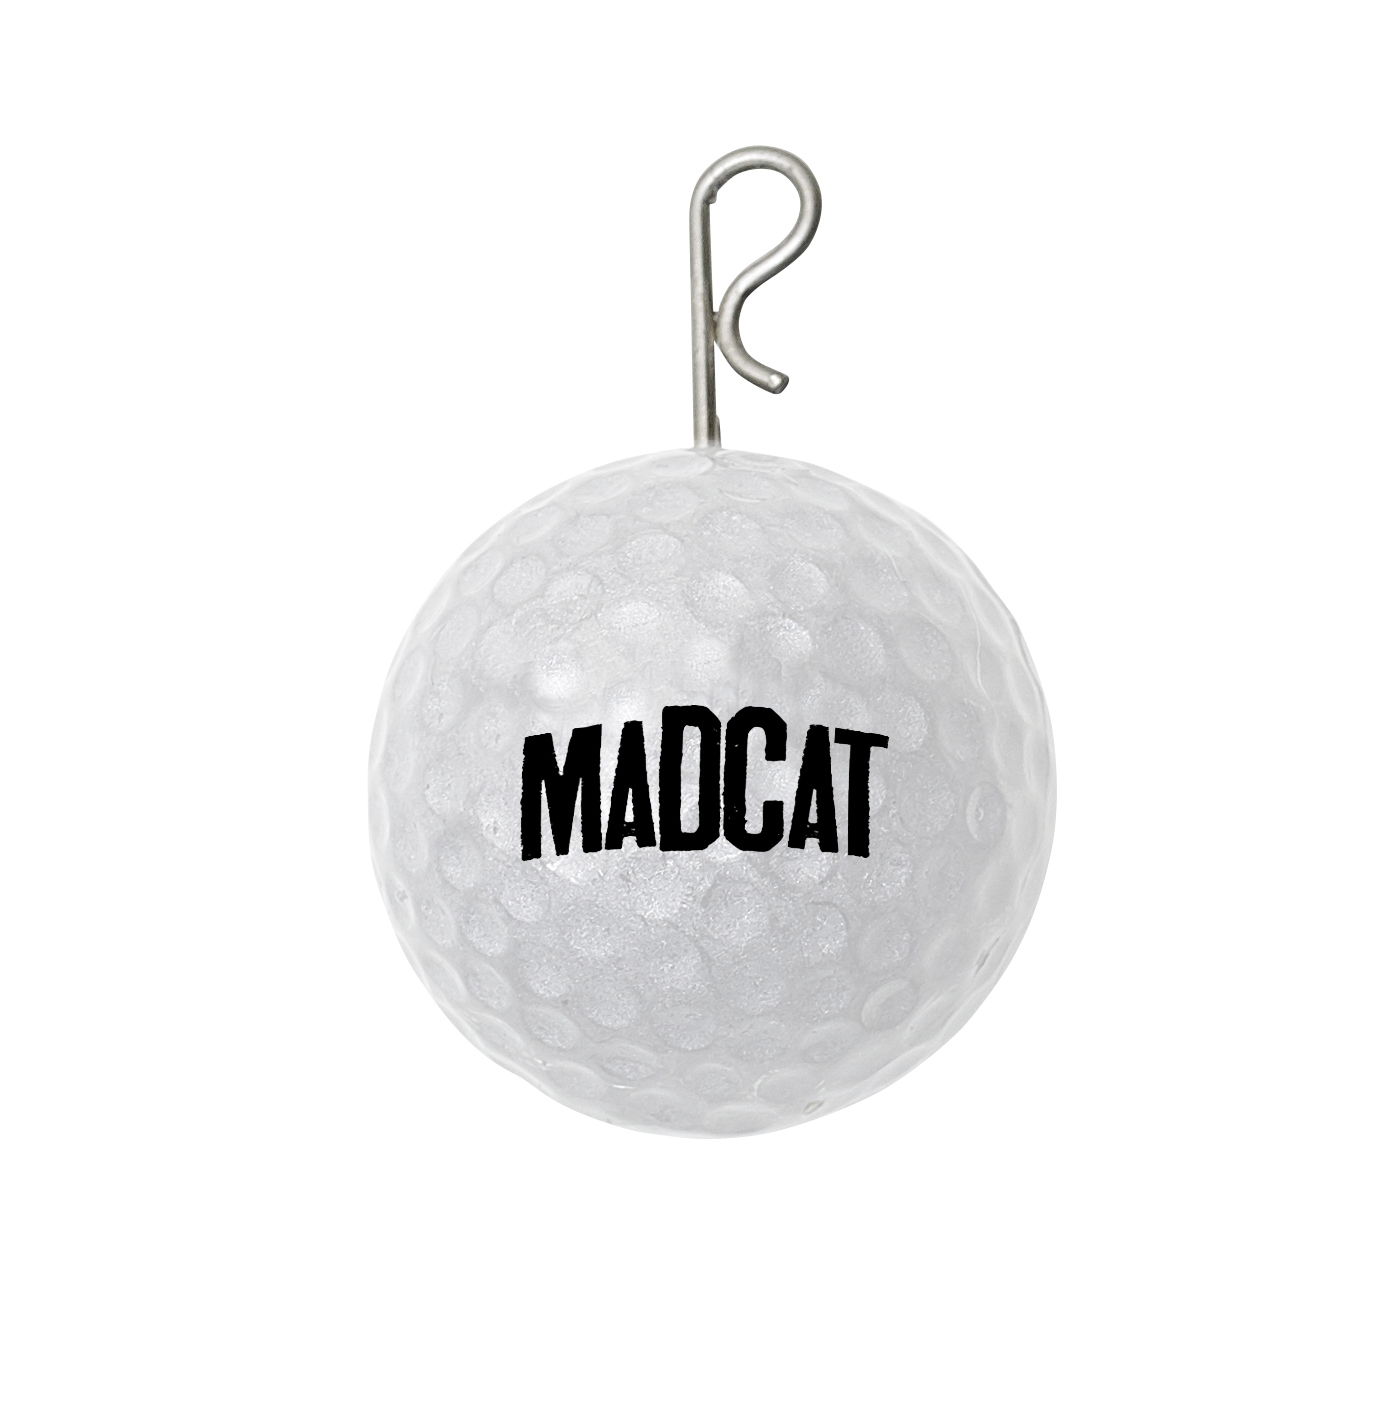 Madcat Golf Ball Snap-On Catfish Vertiball